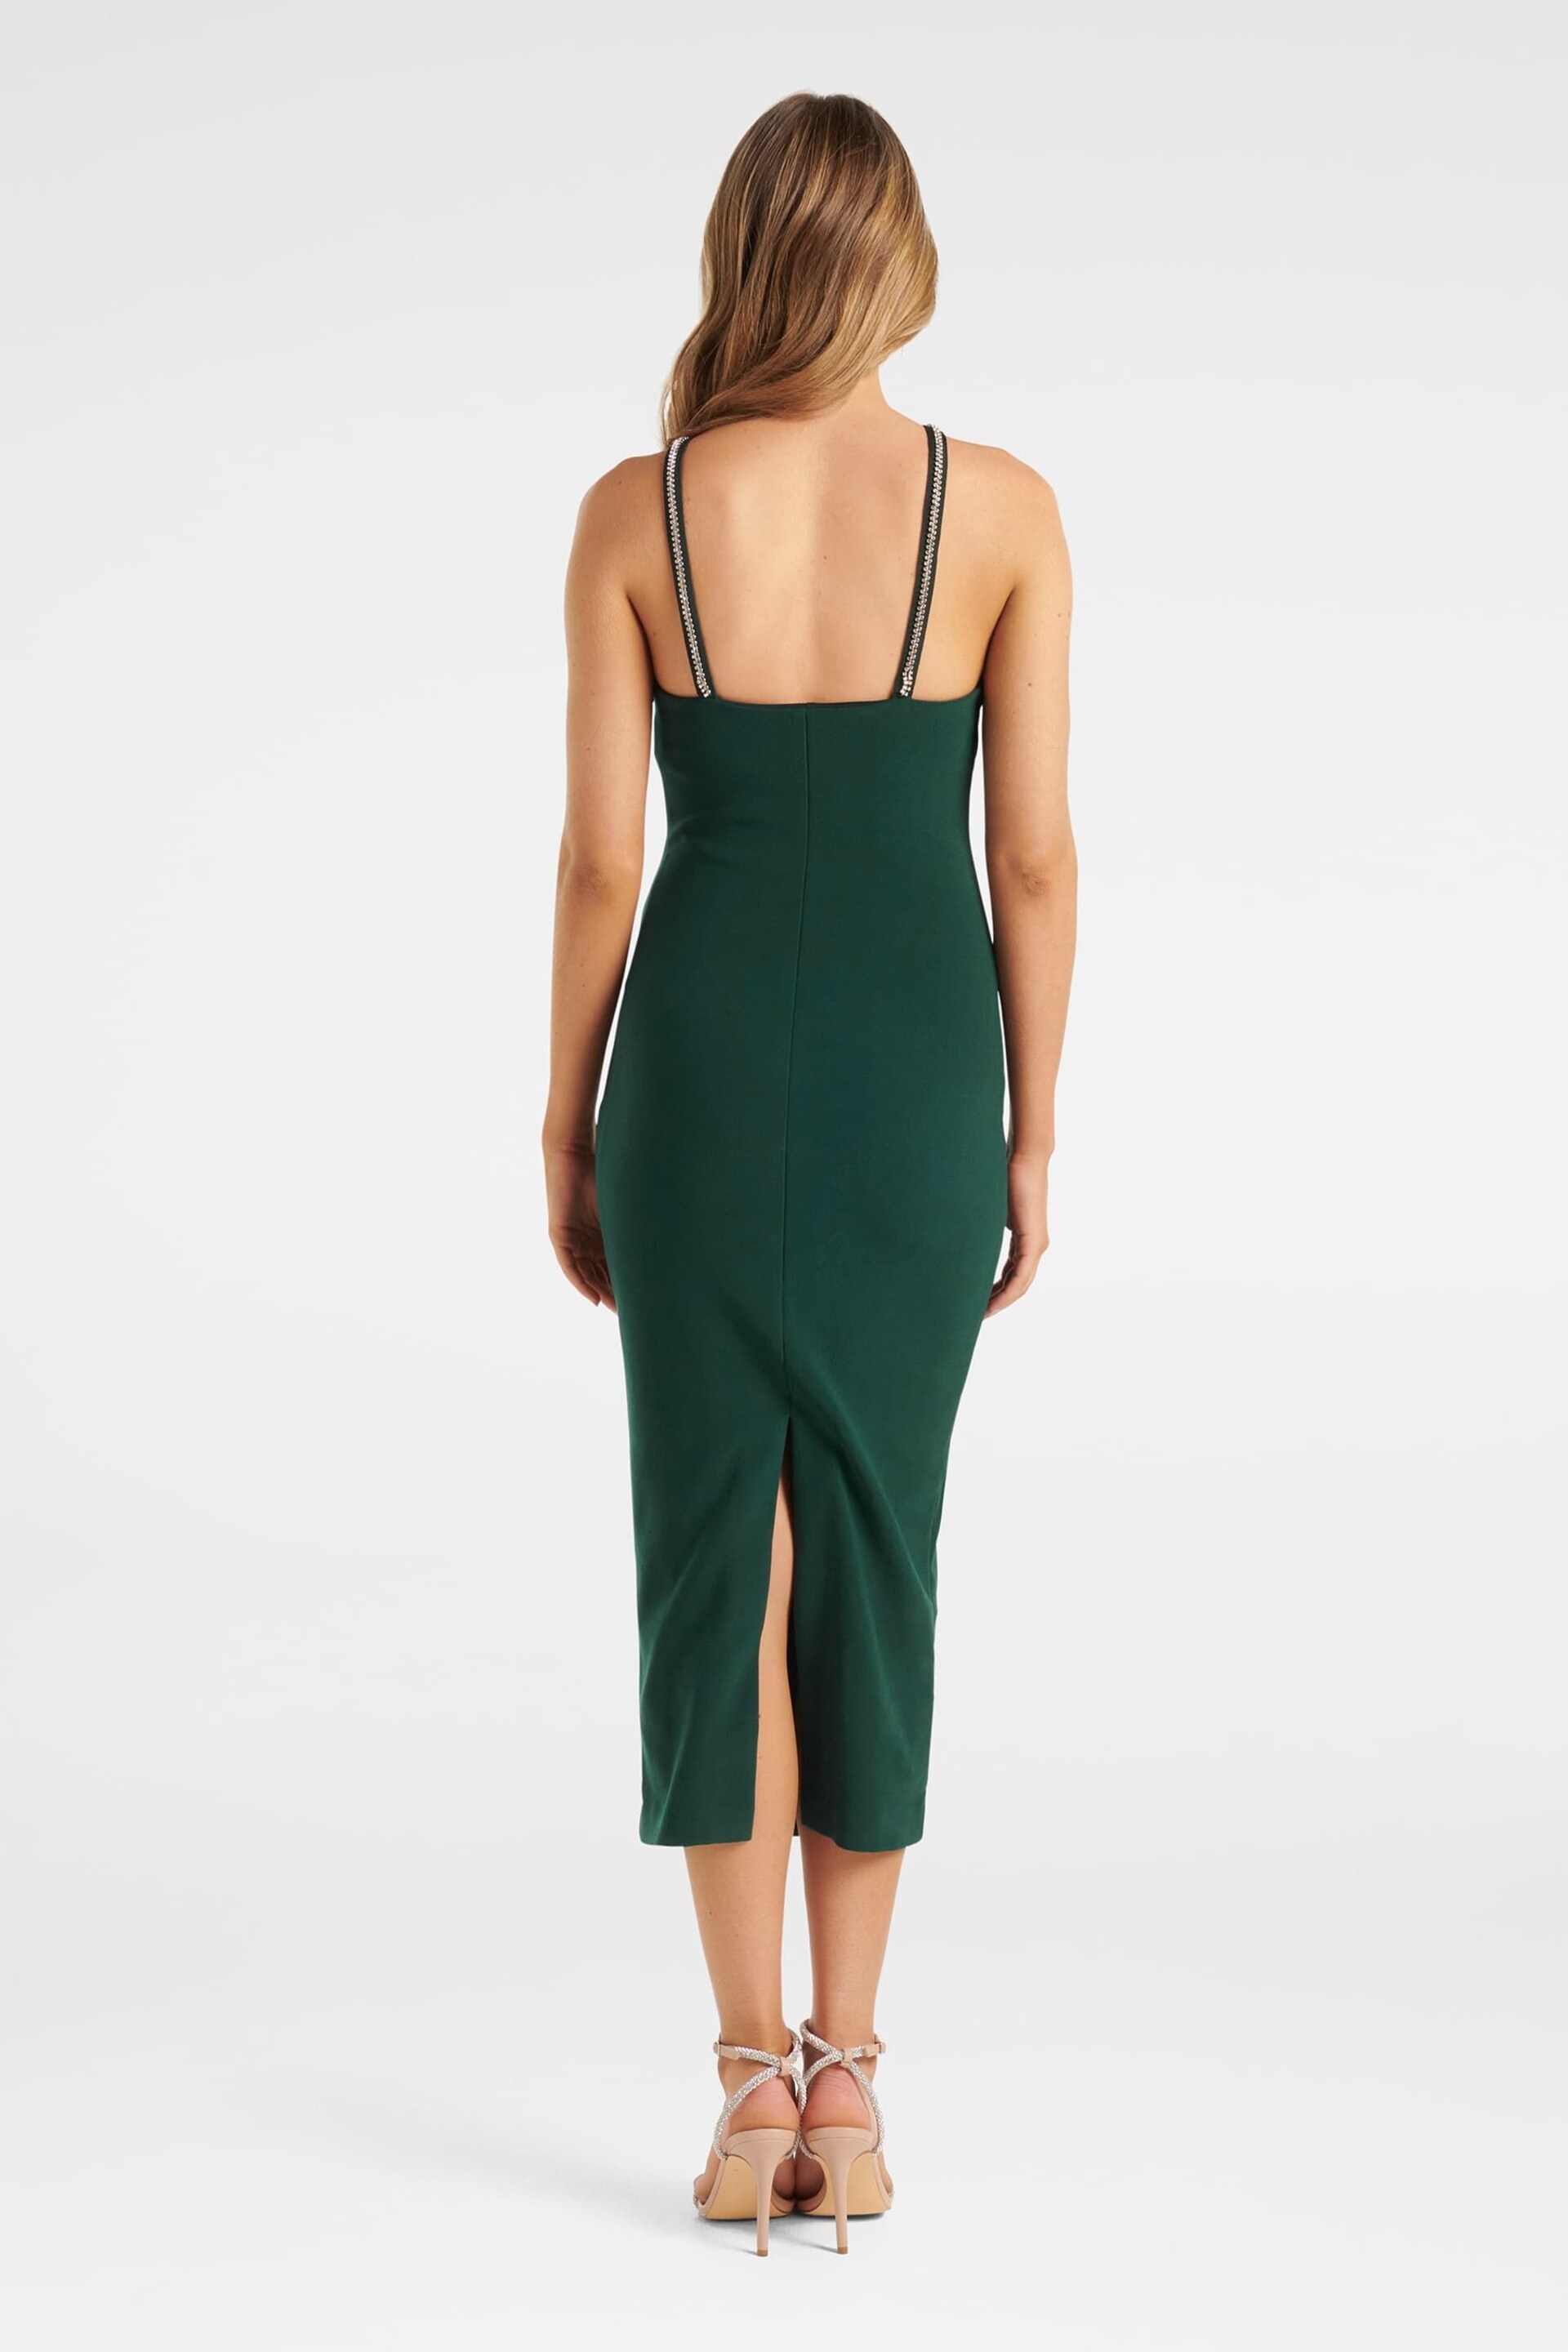 Forever New Green Gwen Arrow Neck Trim Bodycon Midi Dress - Image 2 of 4